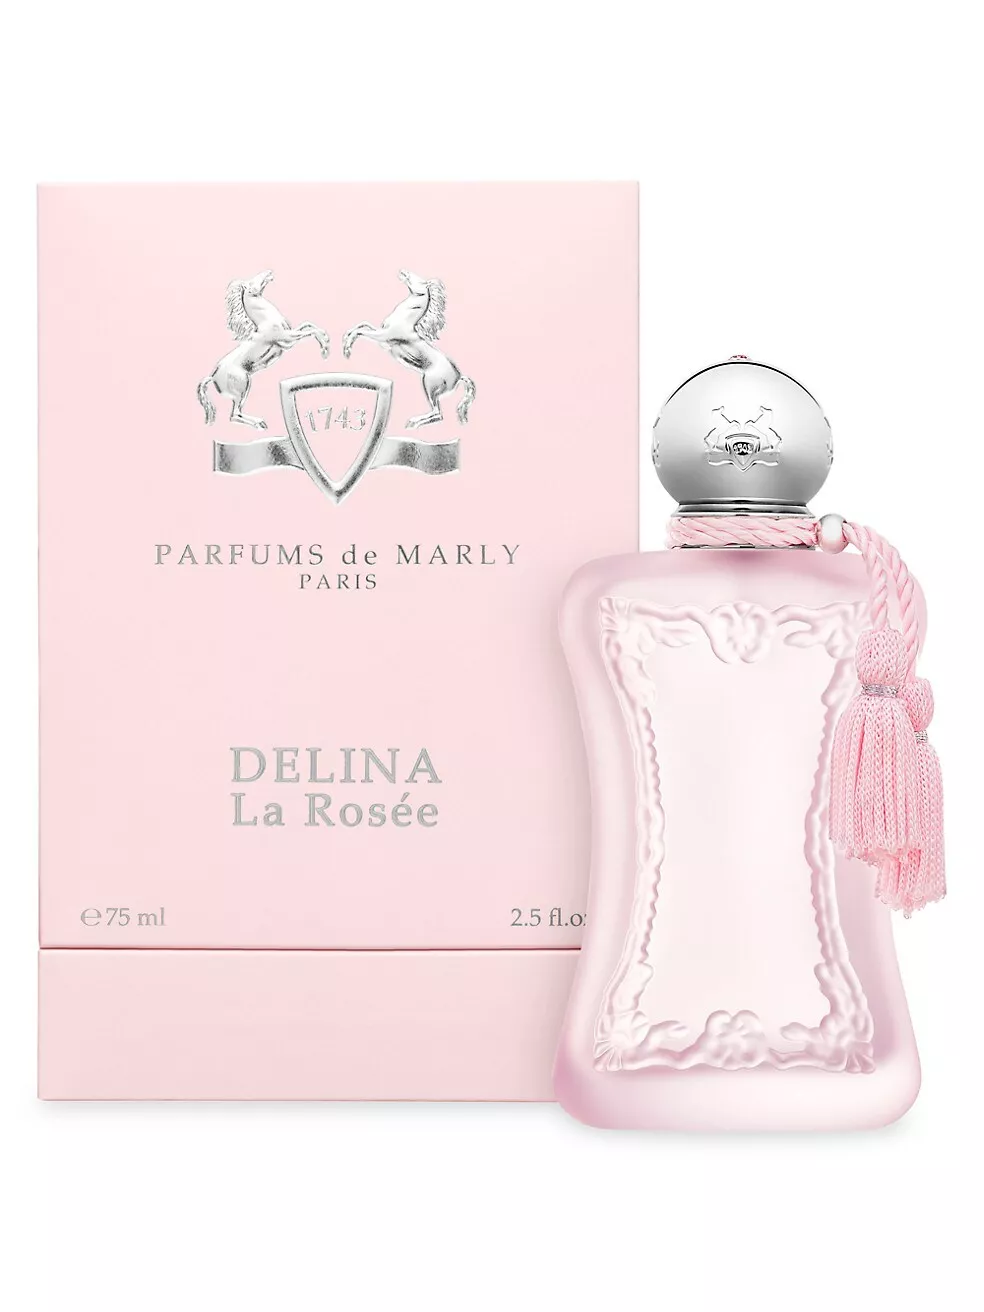 Delina Eau de Parfum curated on LTK